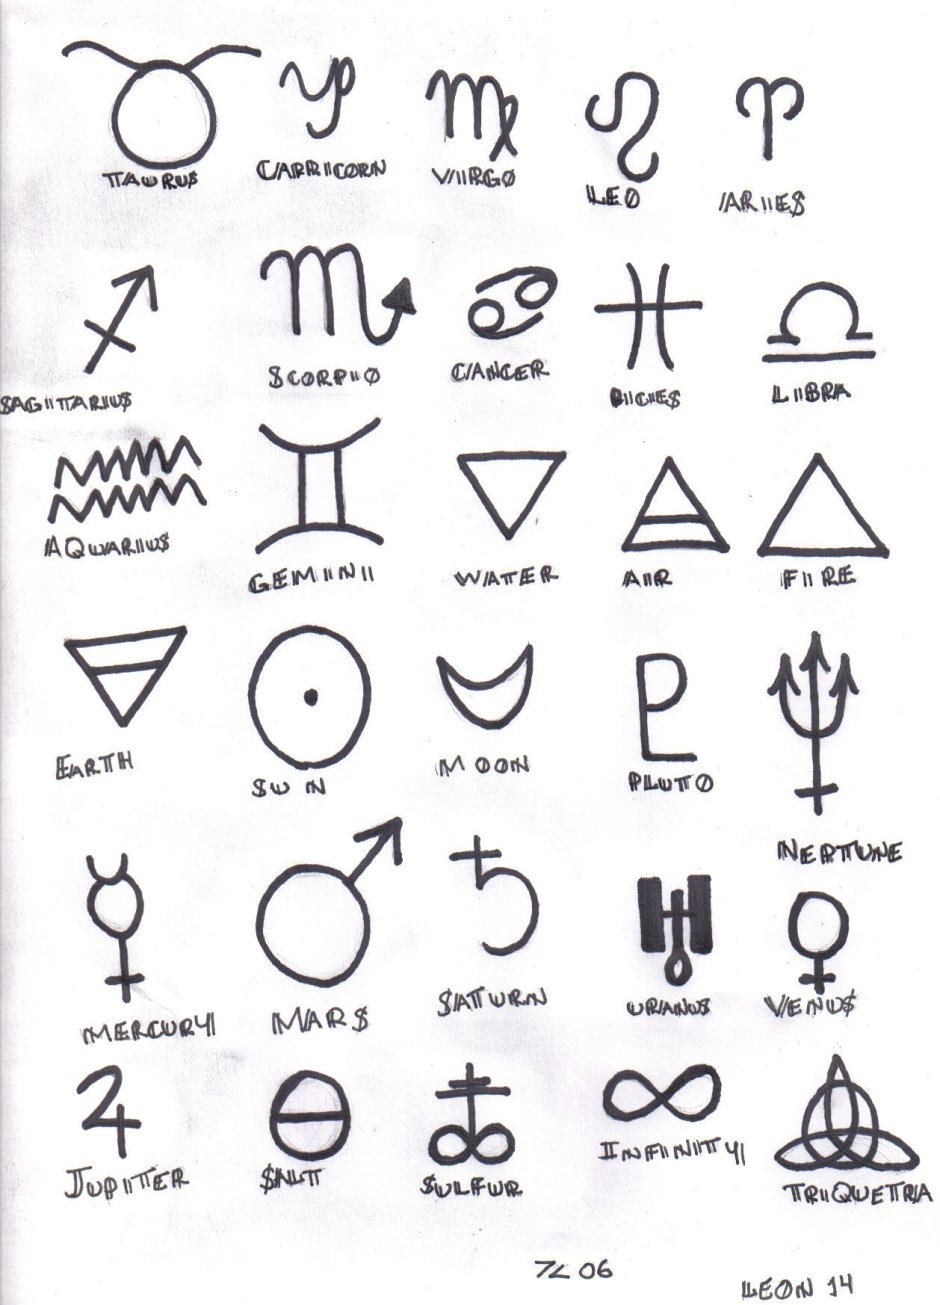 30 Hieroglyphics Tattoos For Men - YouTube